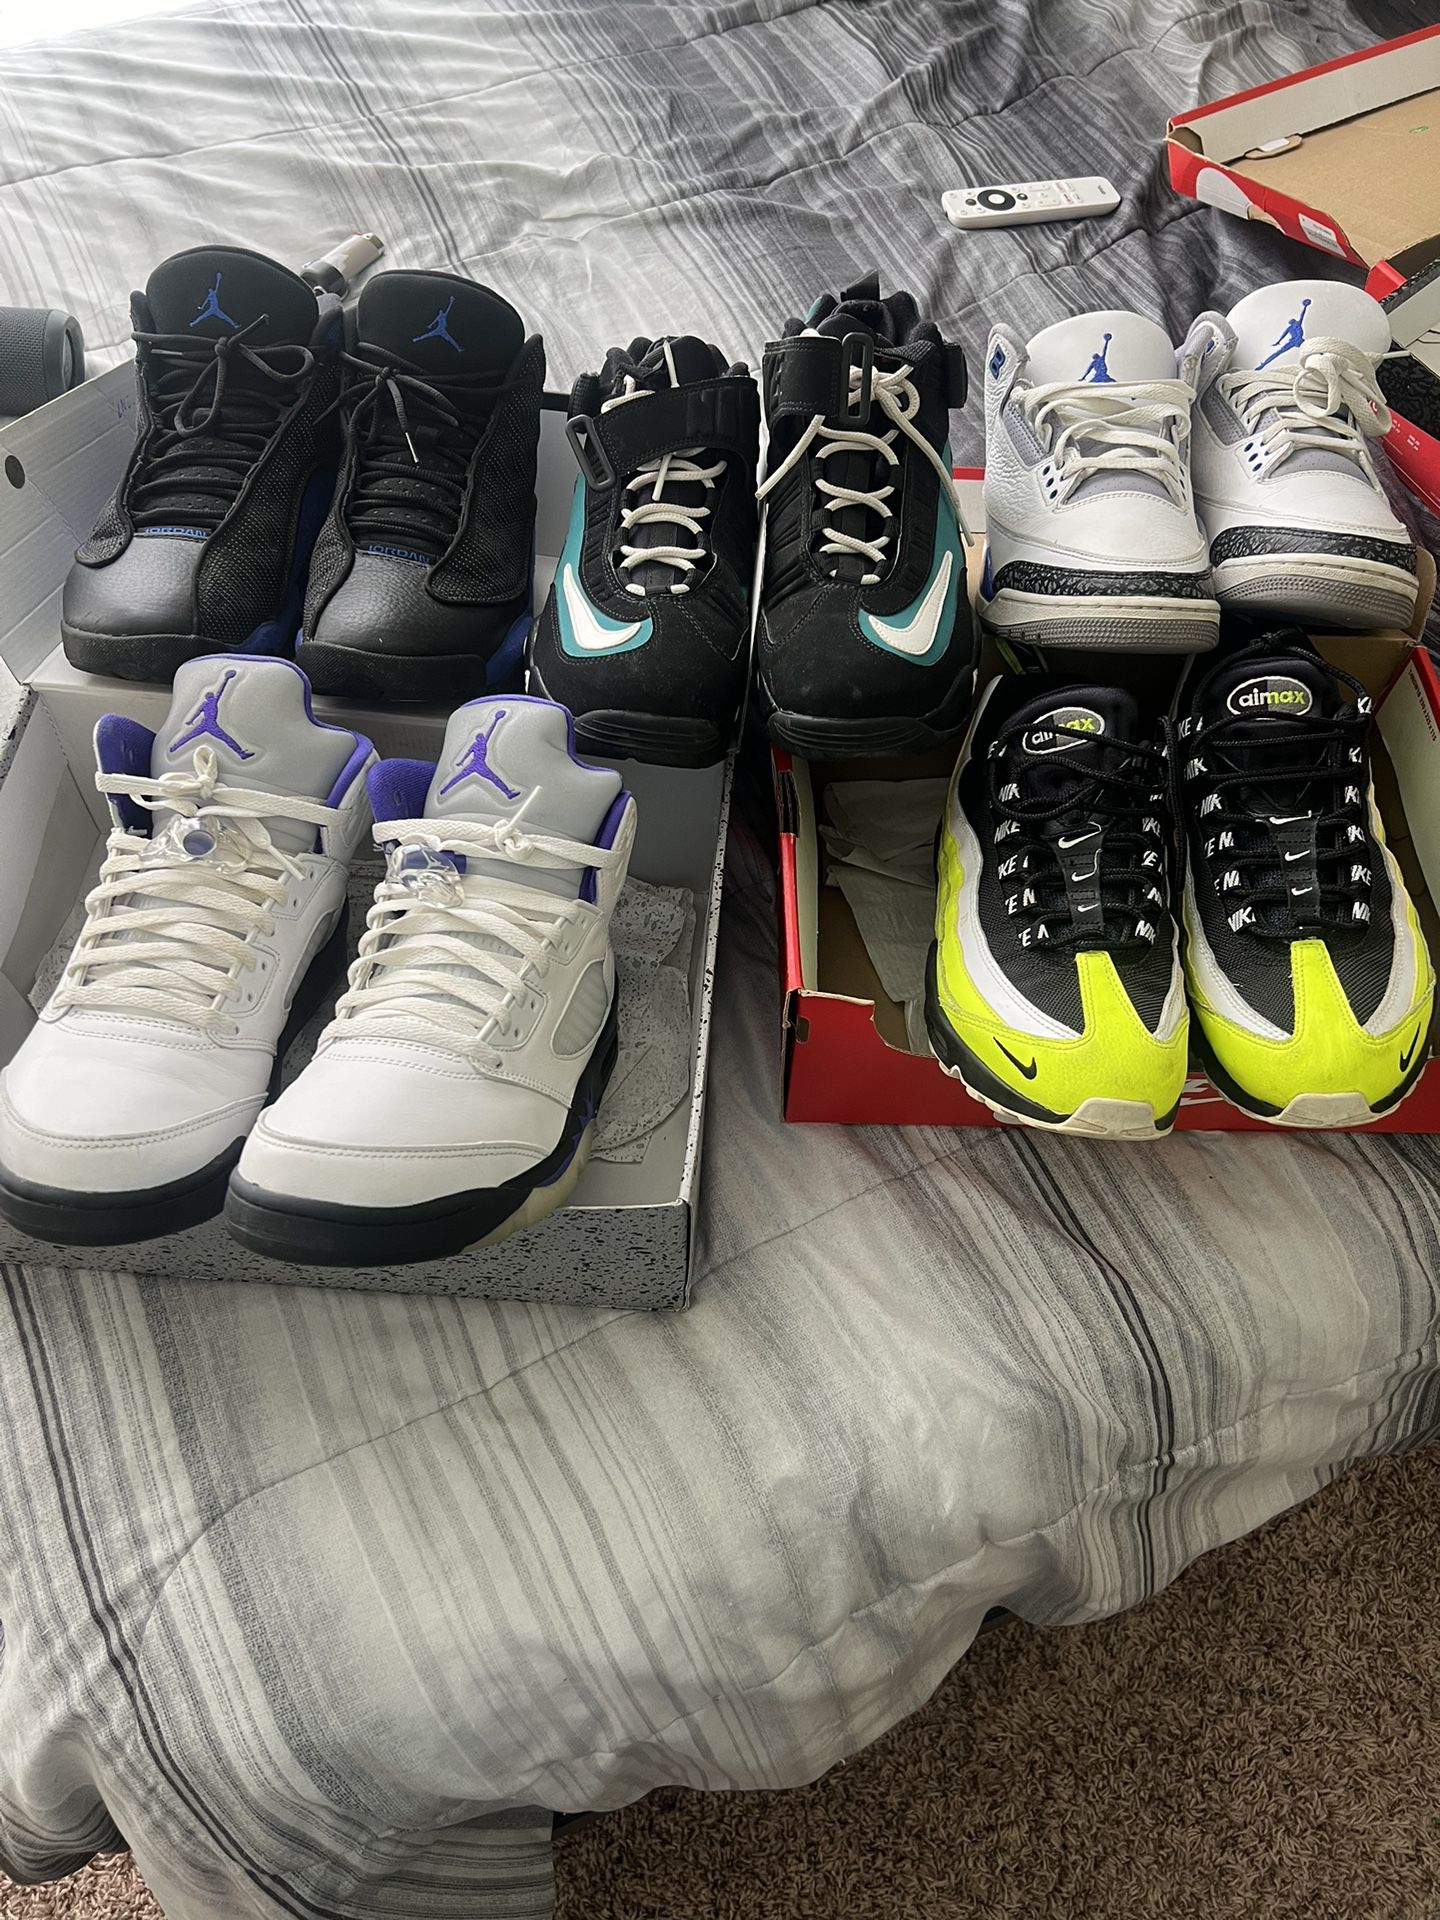 Jordan’s/Nike